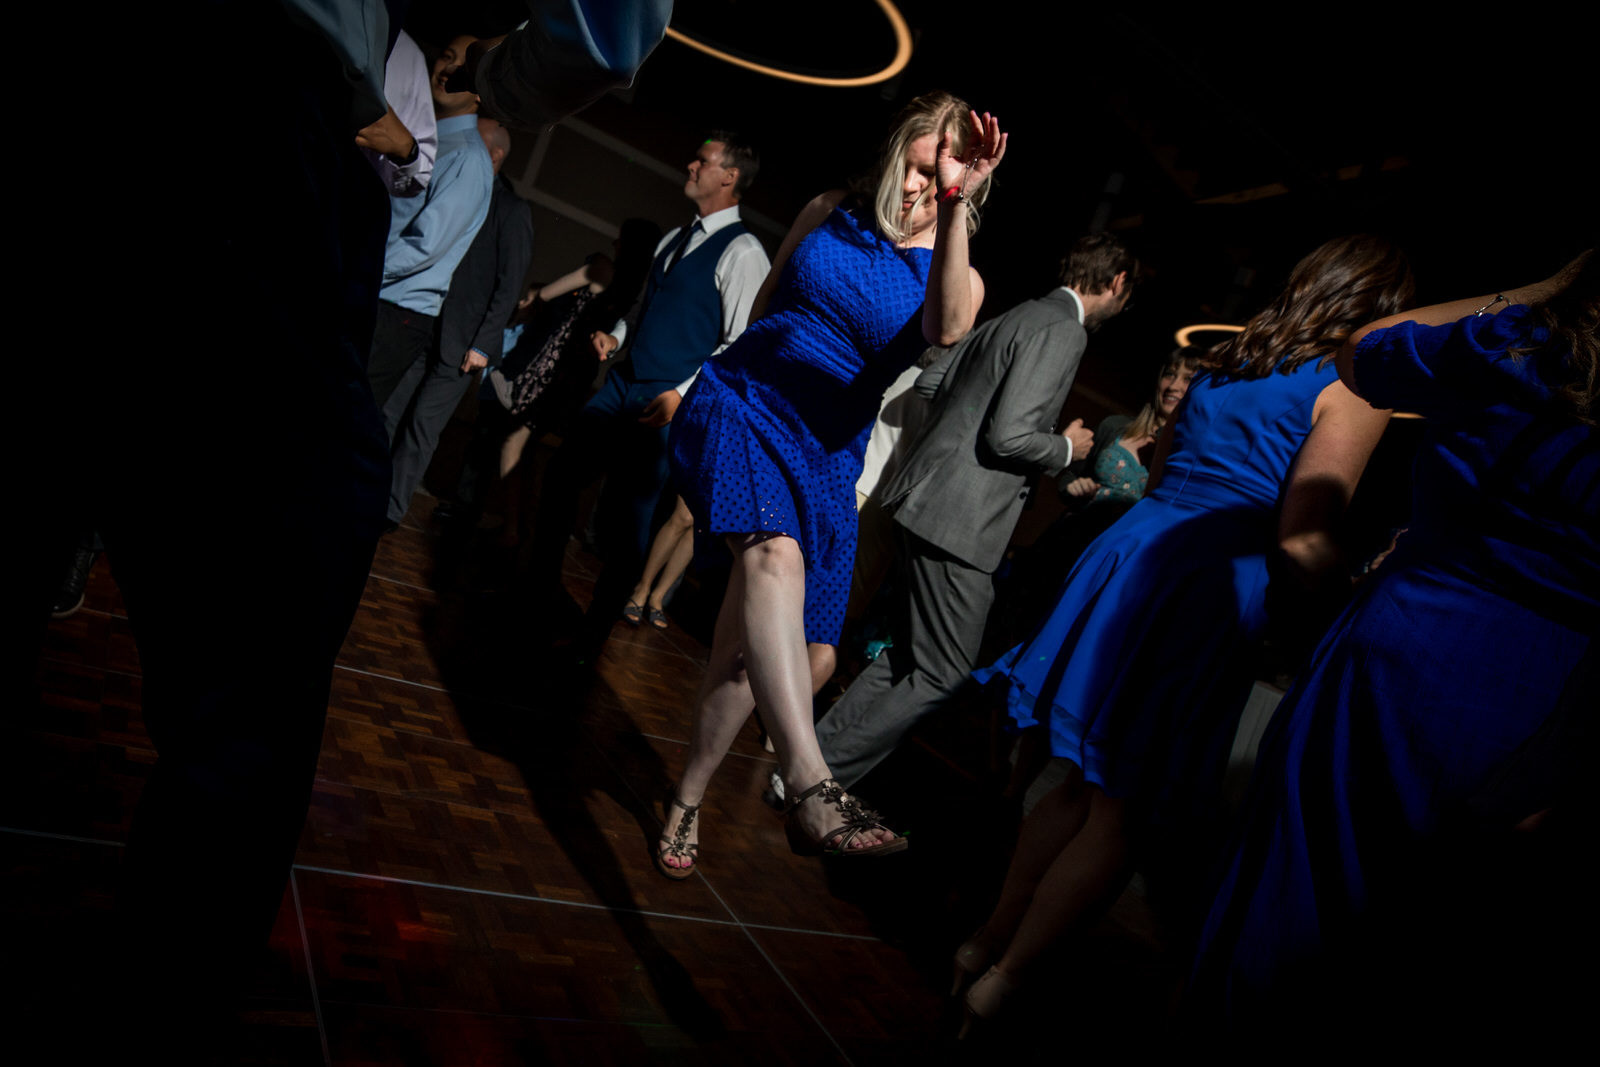 Earle Brown Wedding guest in a blue dress dancing